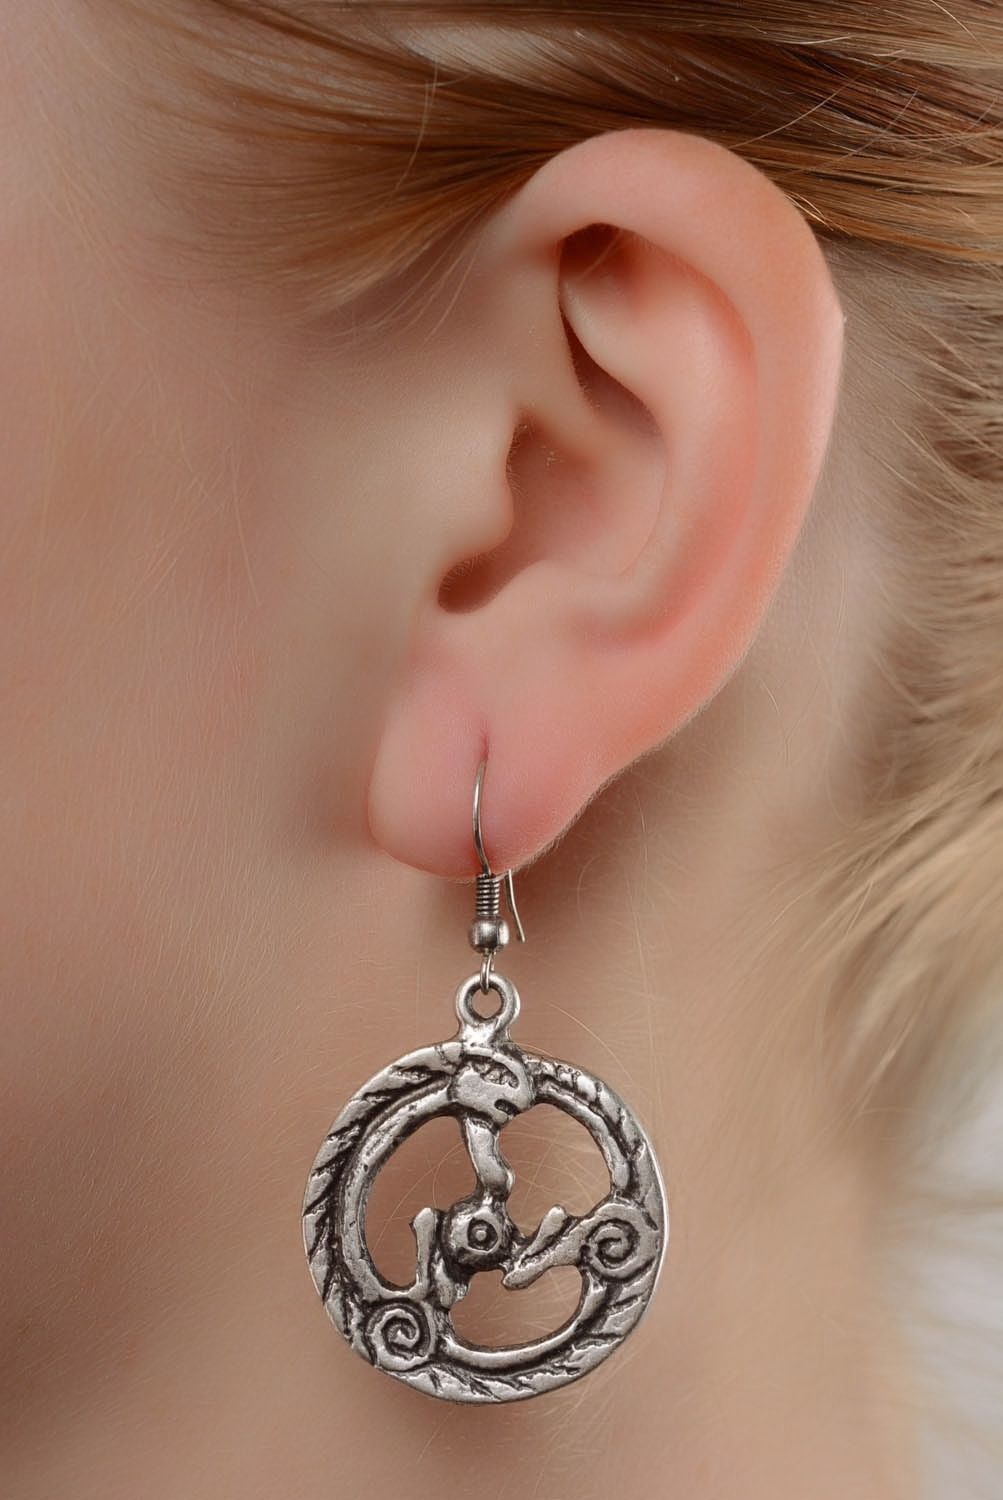 Round earrings photo 4